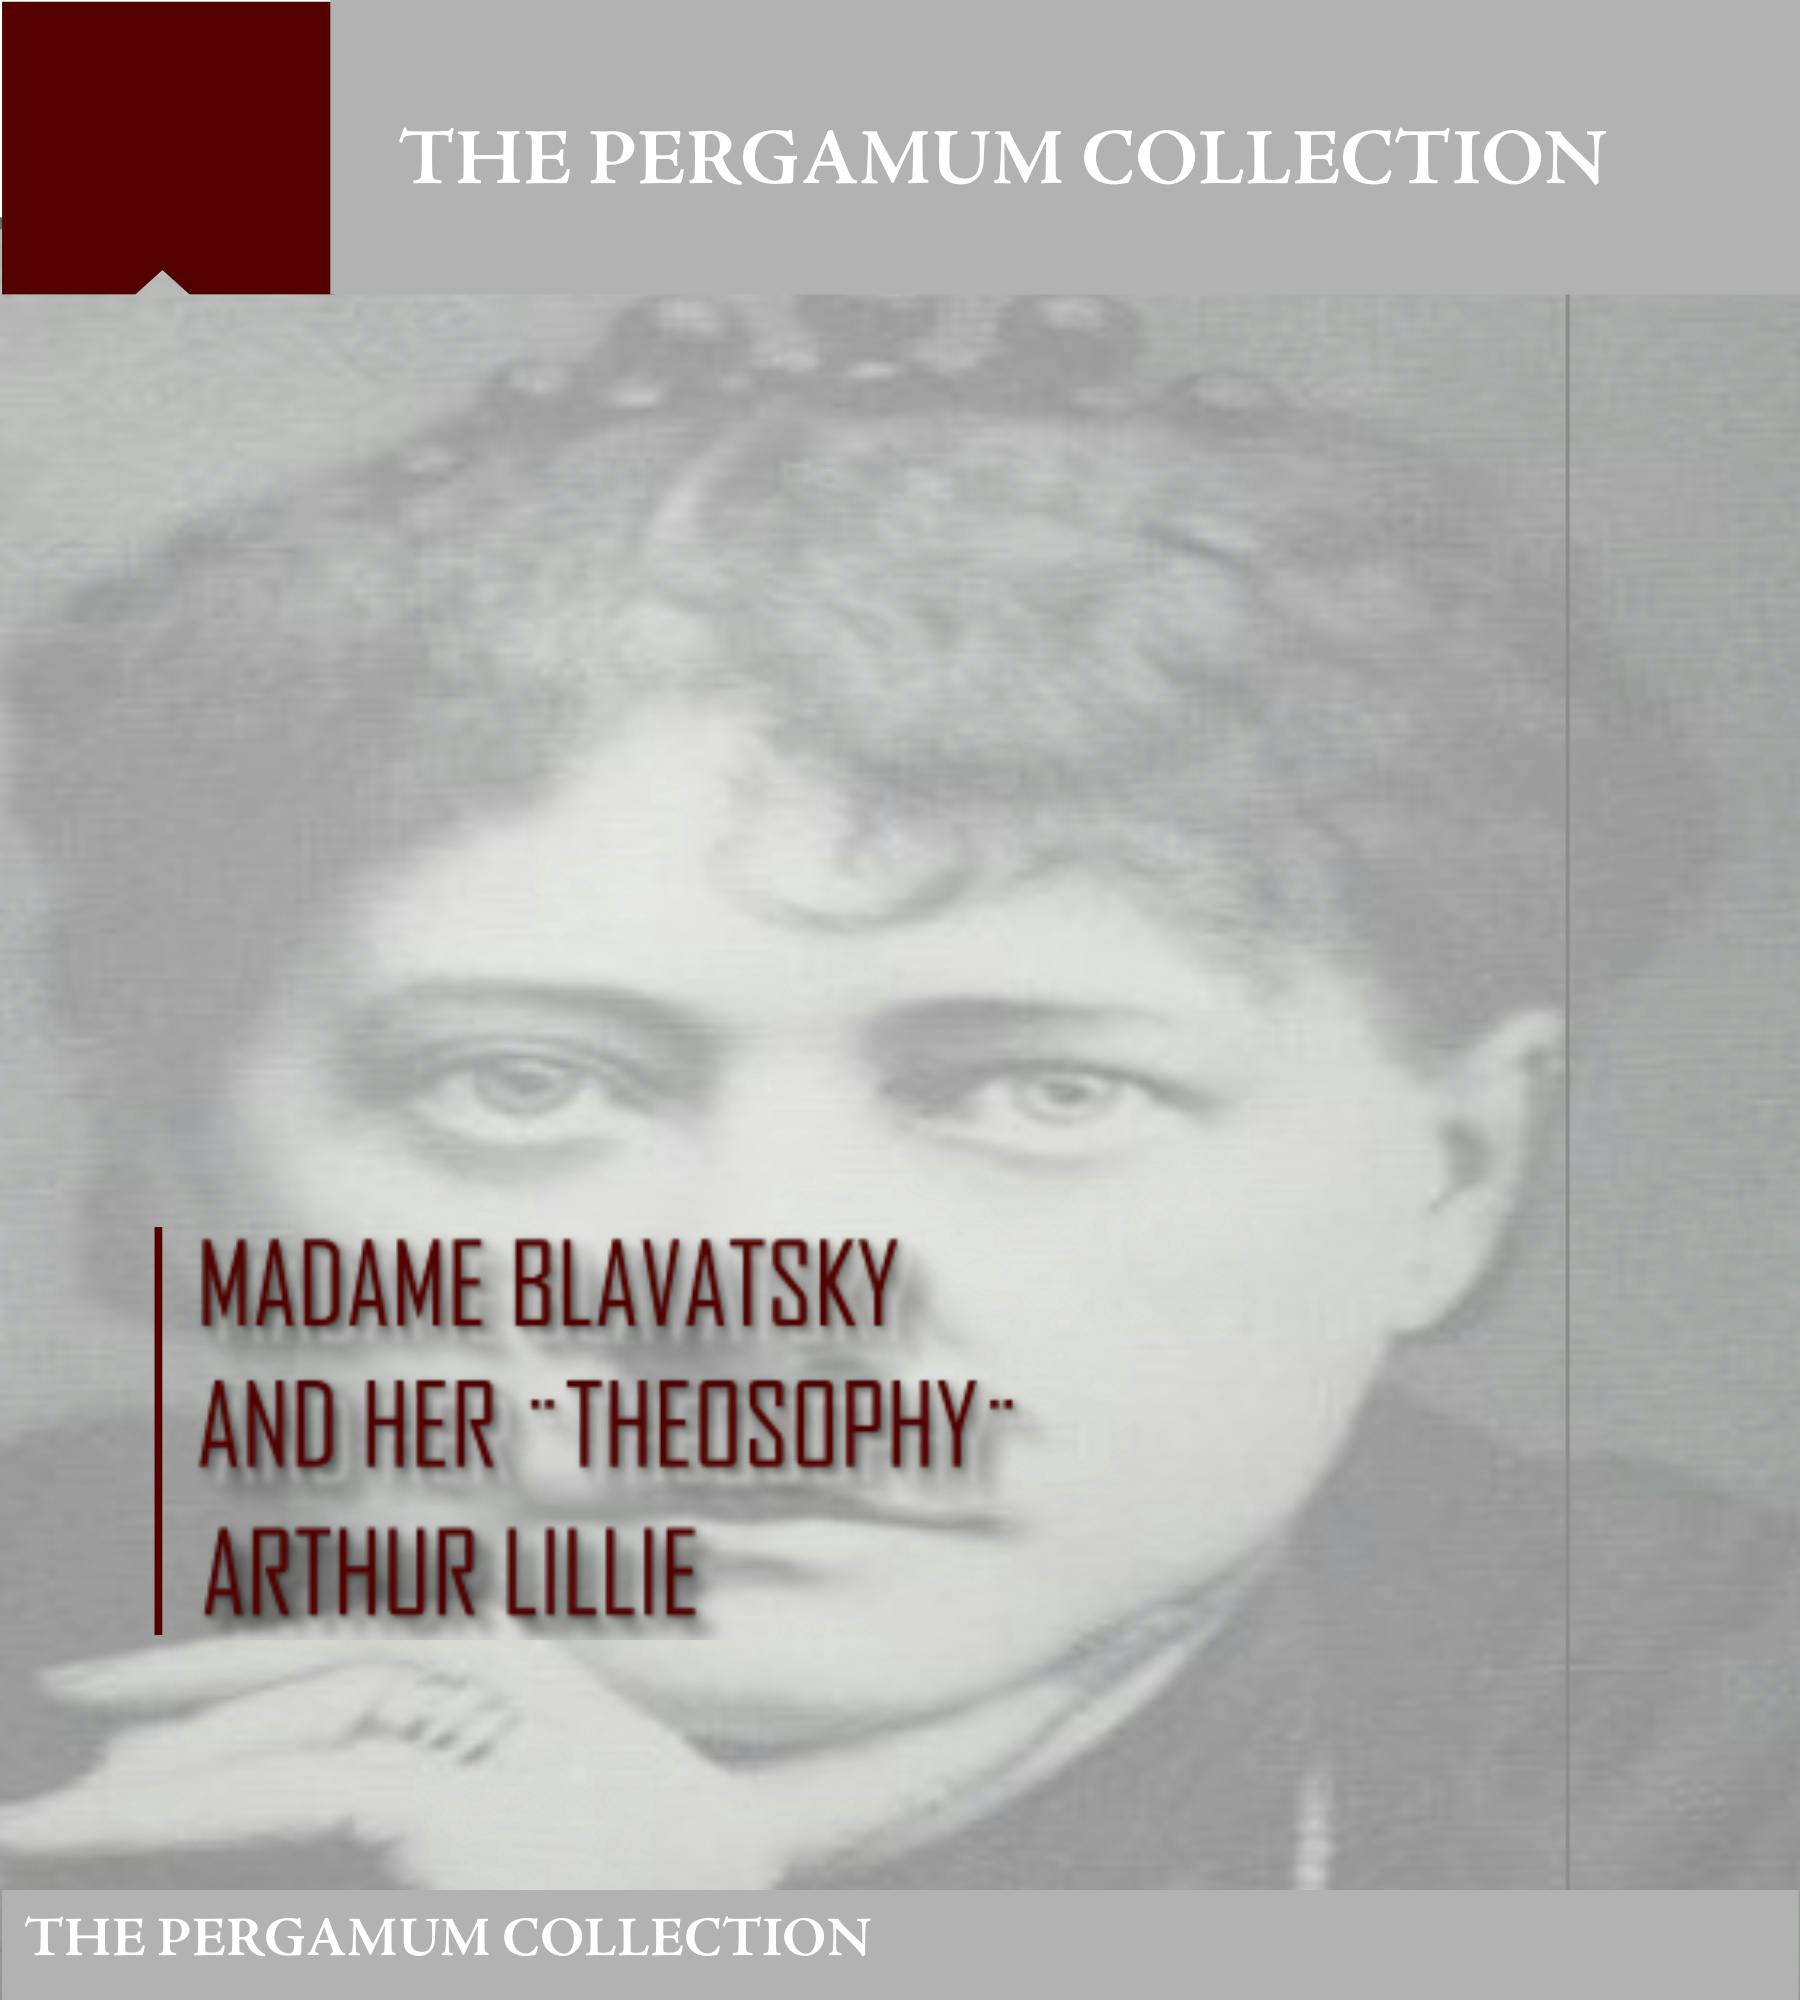 Madame Blavatsky and Her Theosophy - Arthur Lillie